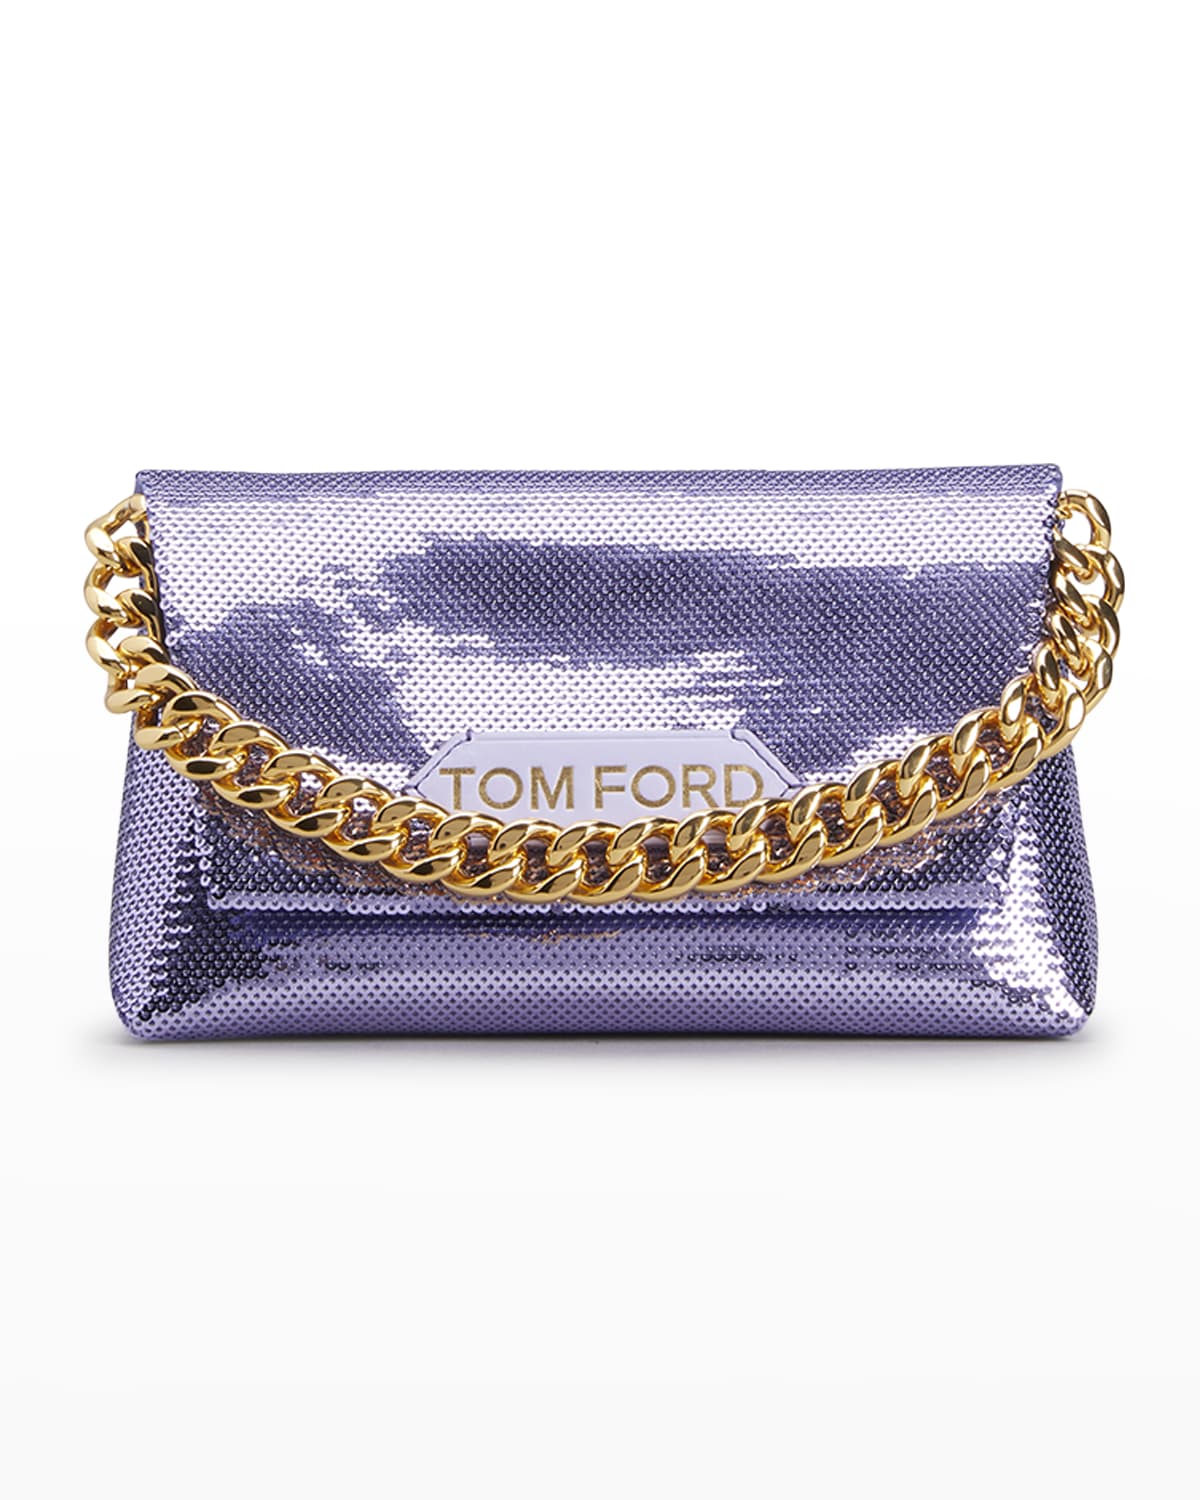 Tom Ford Natalia Small Metallic Python Shoulder Bag